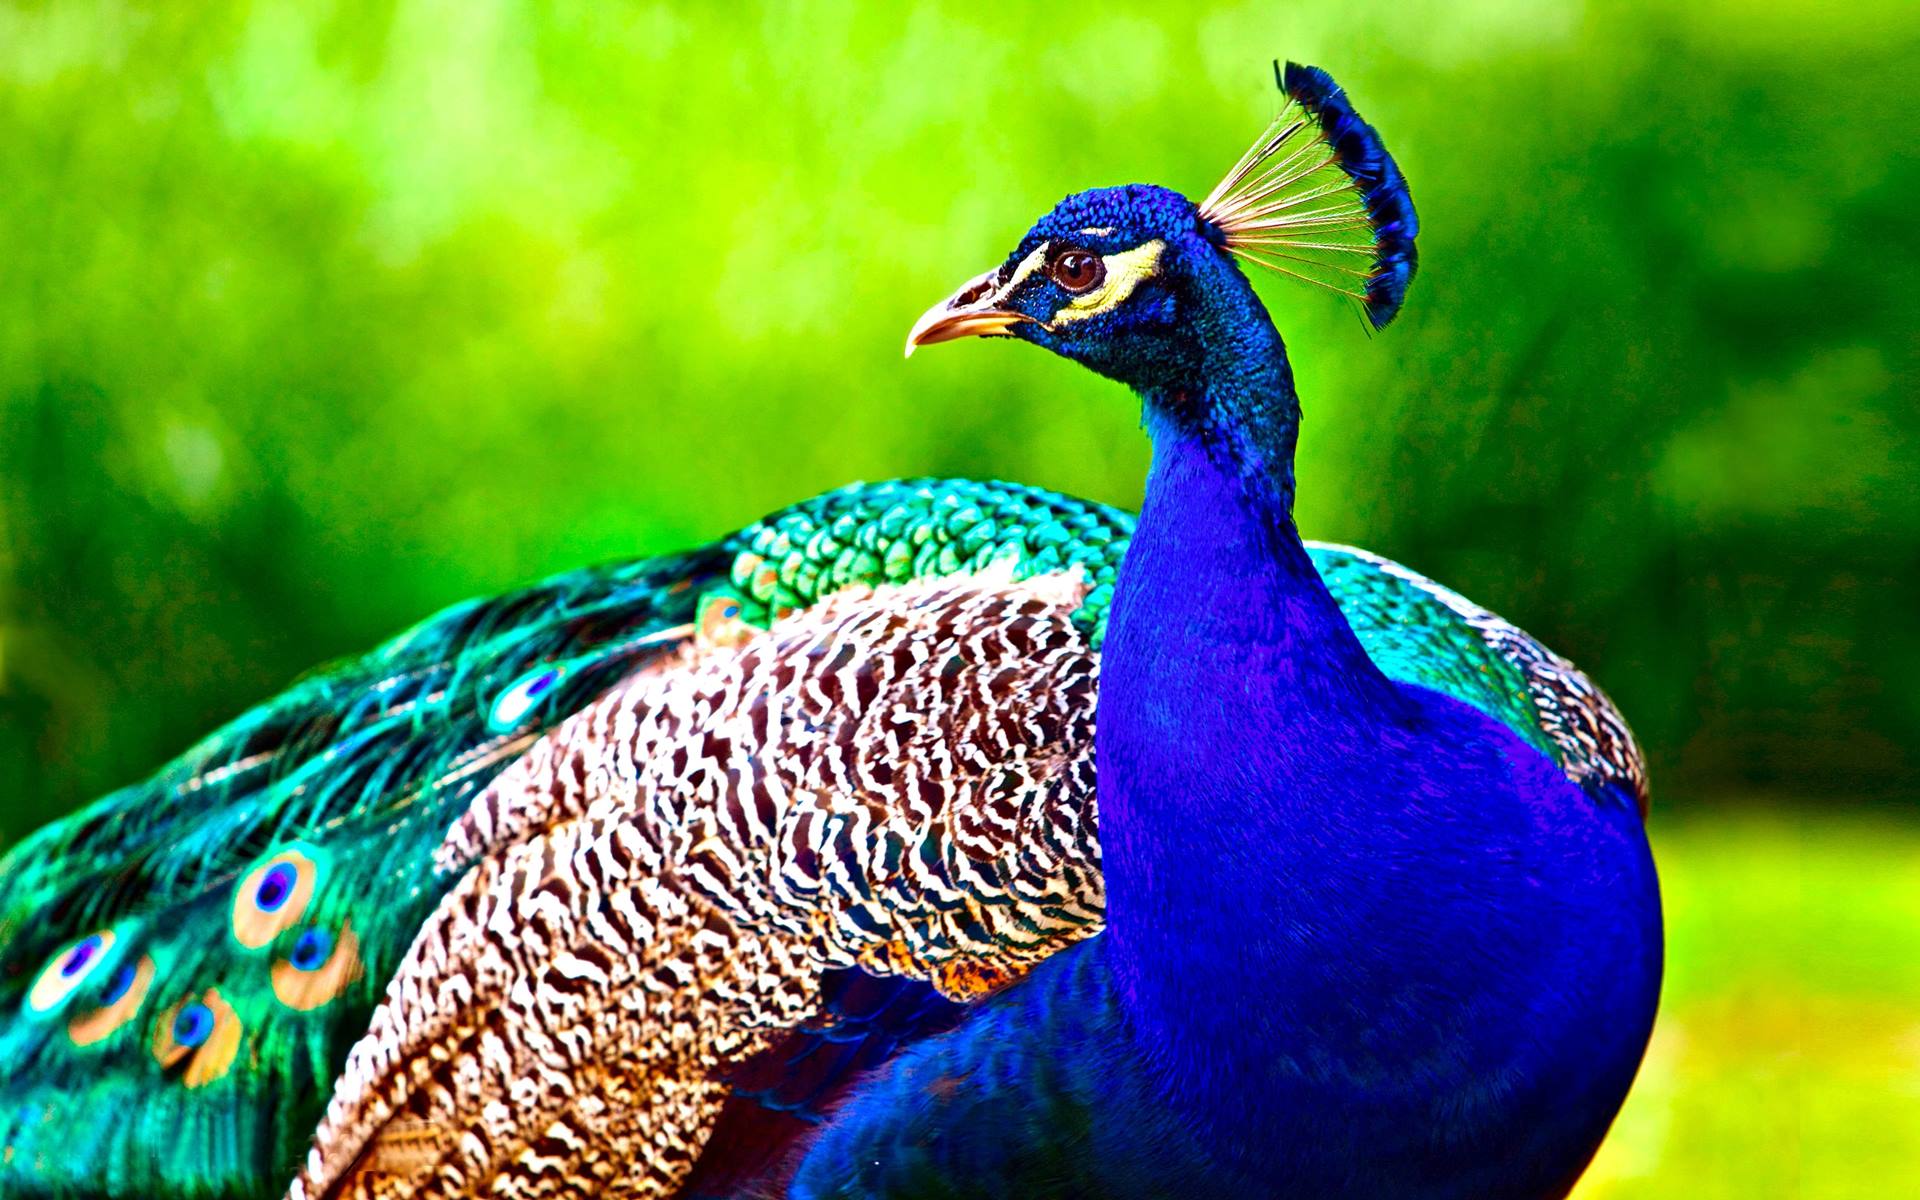 Free photo: Beautiful Peacock, peacock, nature